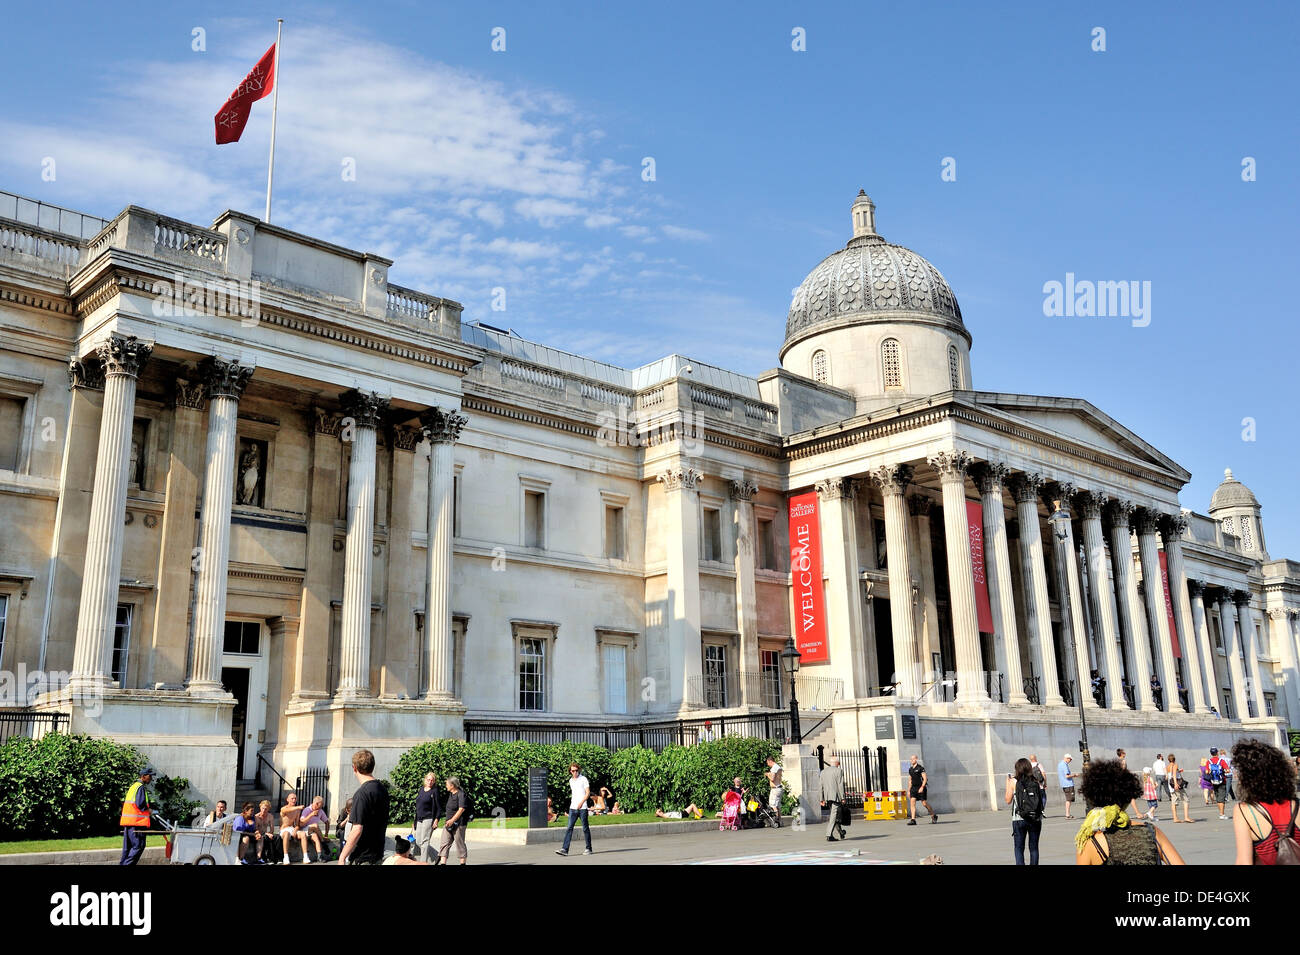 The National Gallery Trafalgar Square London Stock Photo